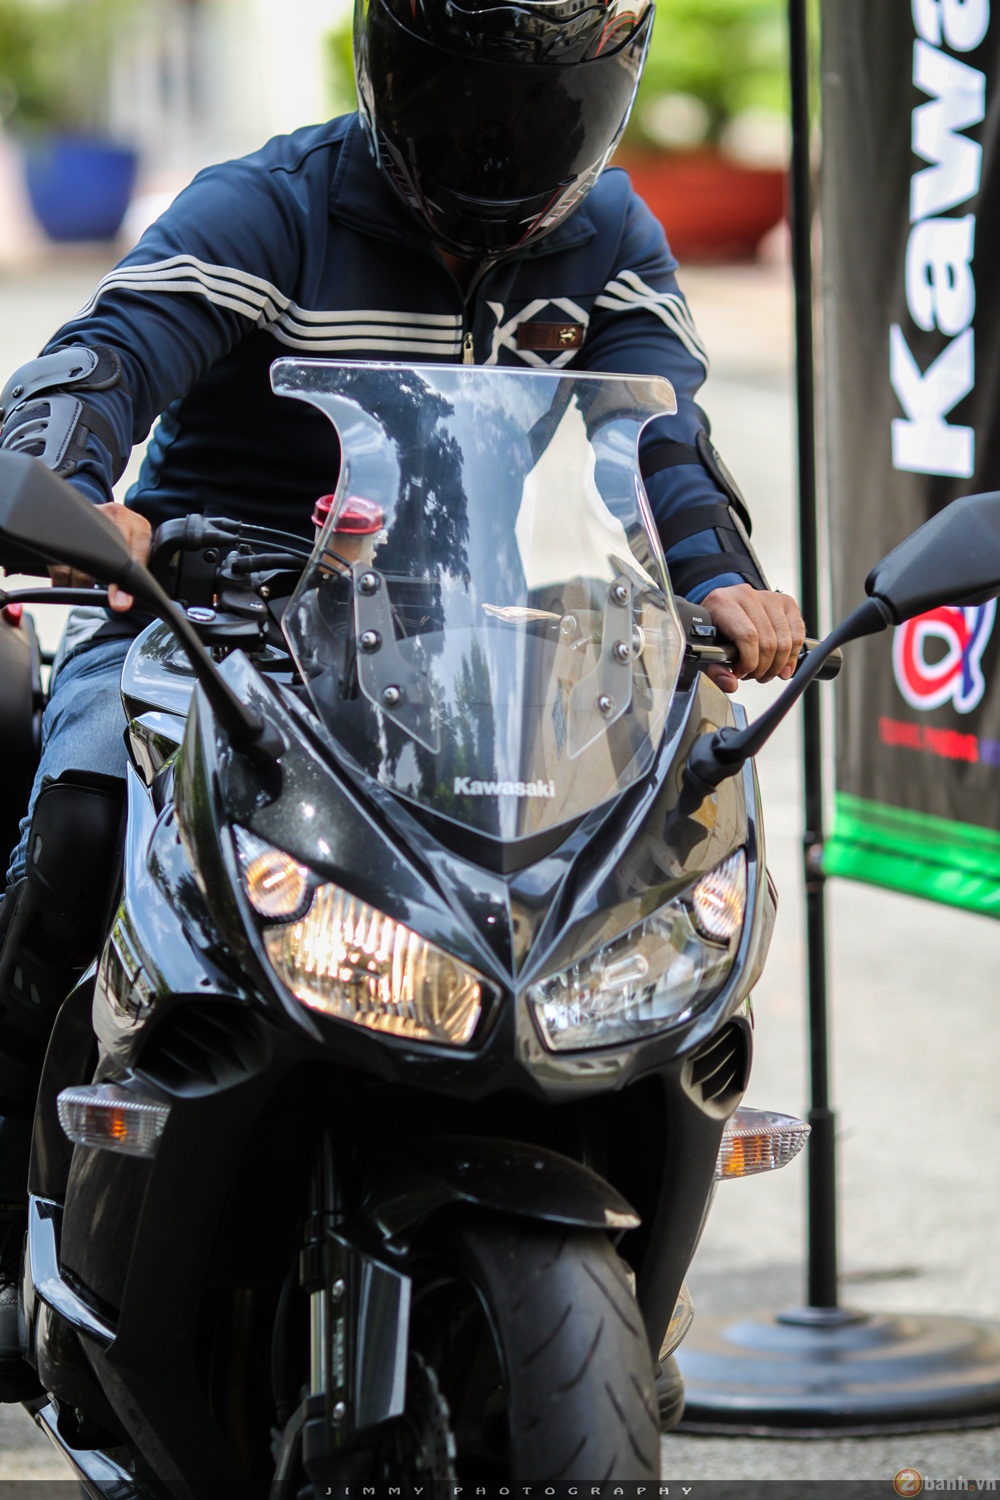 Test Ride cung Kawasaki Quang Phuong Motor trai nghiem dich thuc - 19